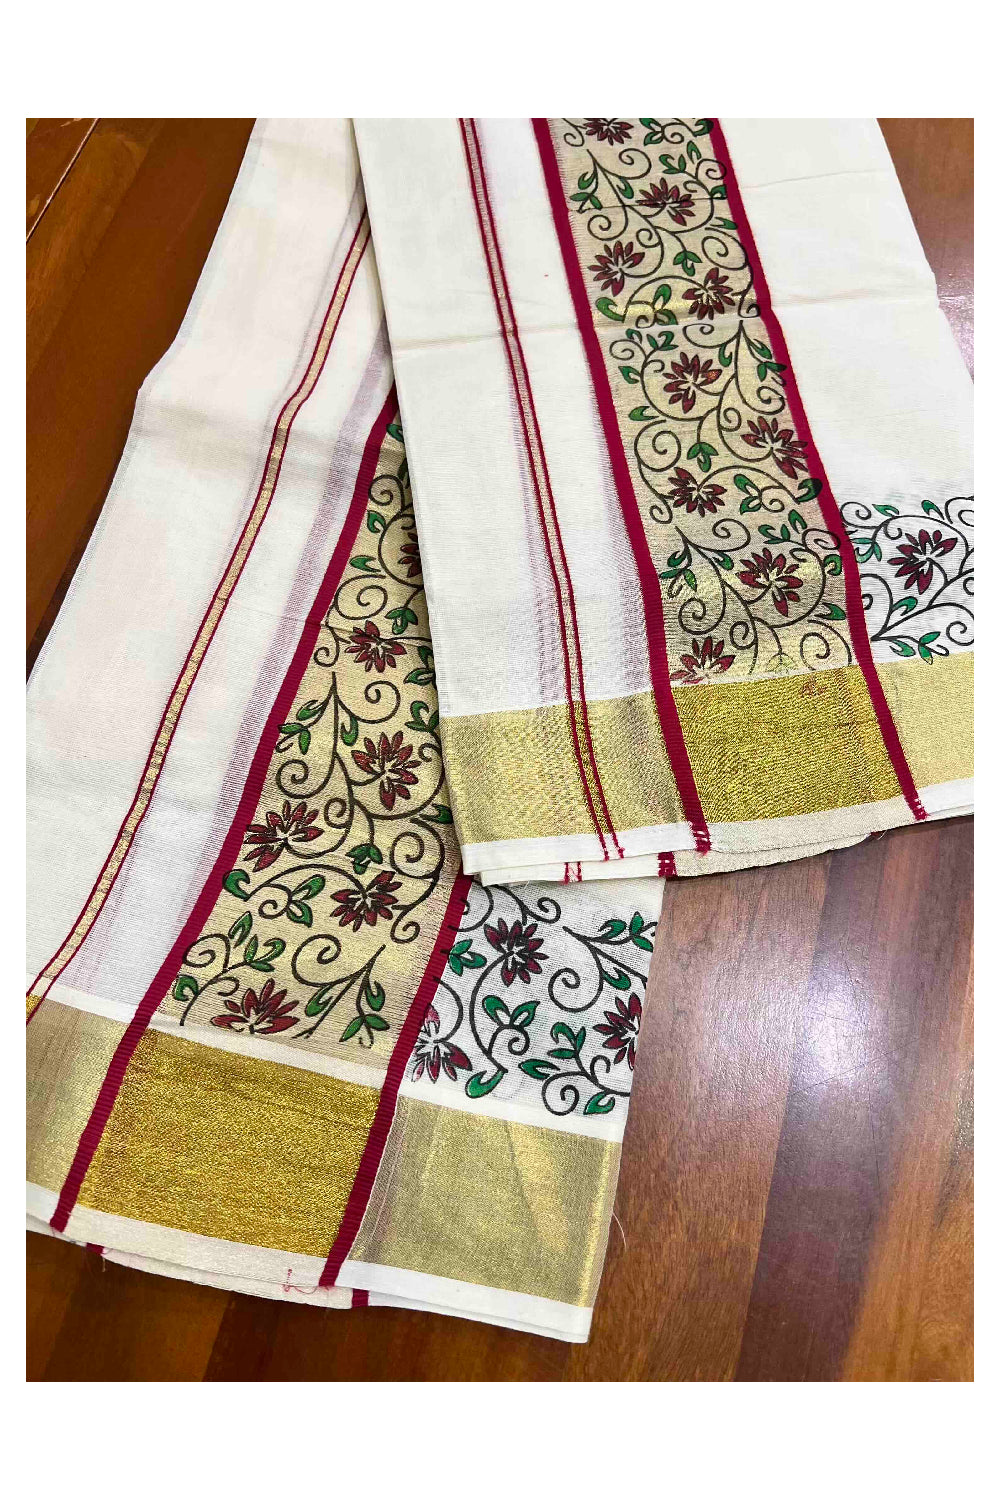 Kerala Cotton Single Set Mundu (Mundum Neriyathum) with Floral Block Prints on Kasavu Red Border